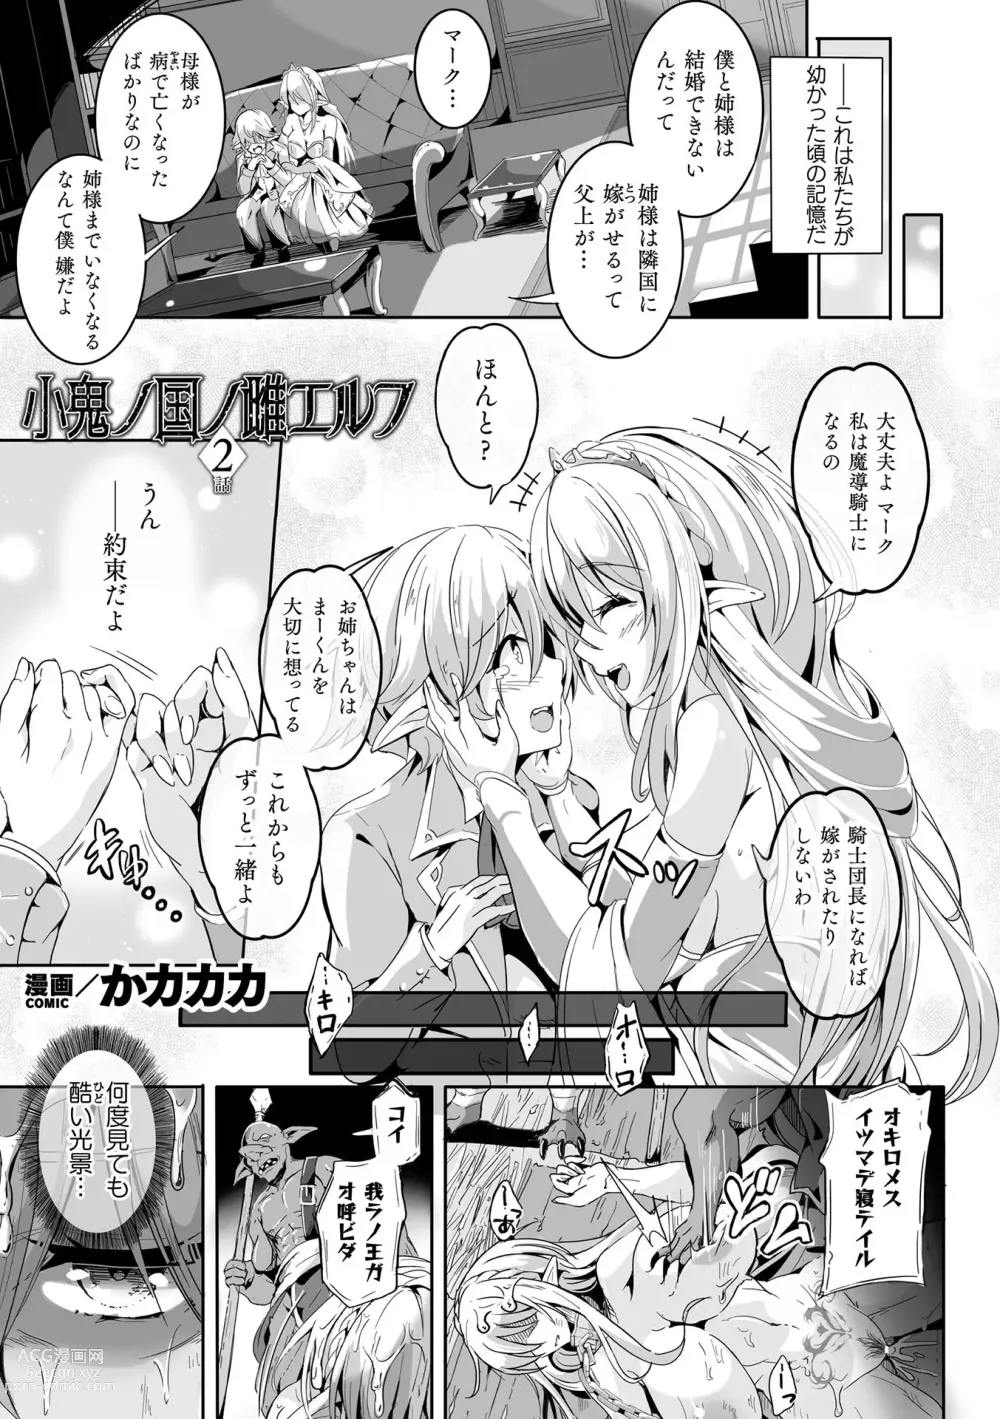 Page 3 of manga Kukkoro Heroines Vol. 28